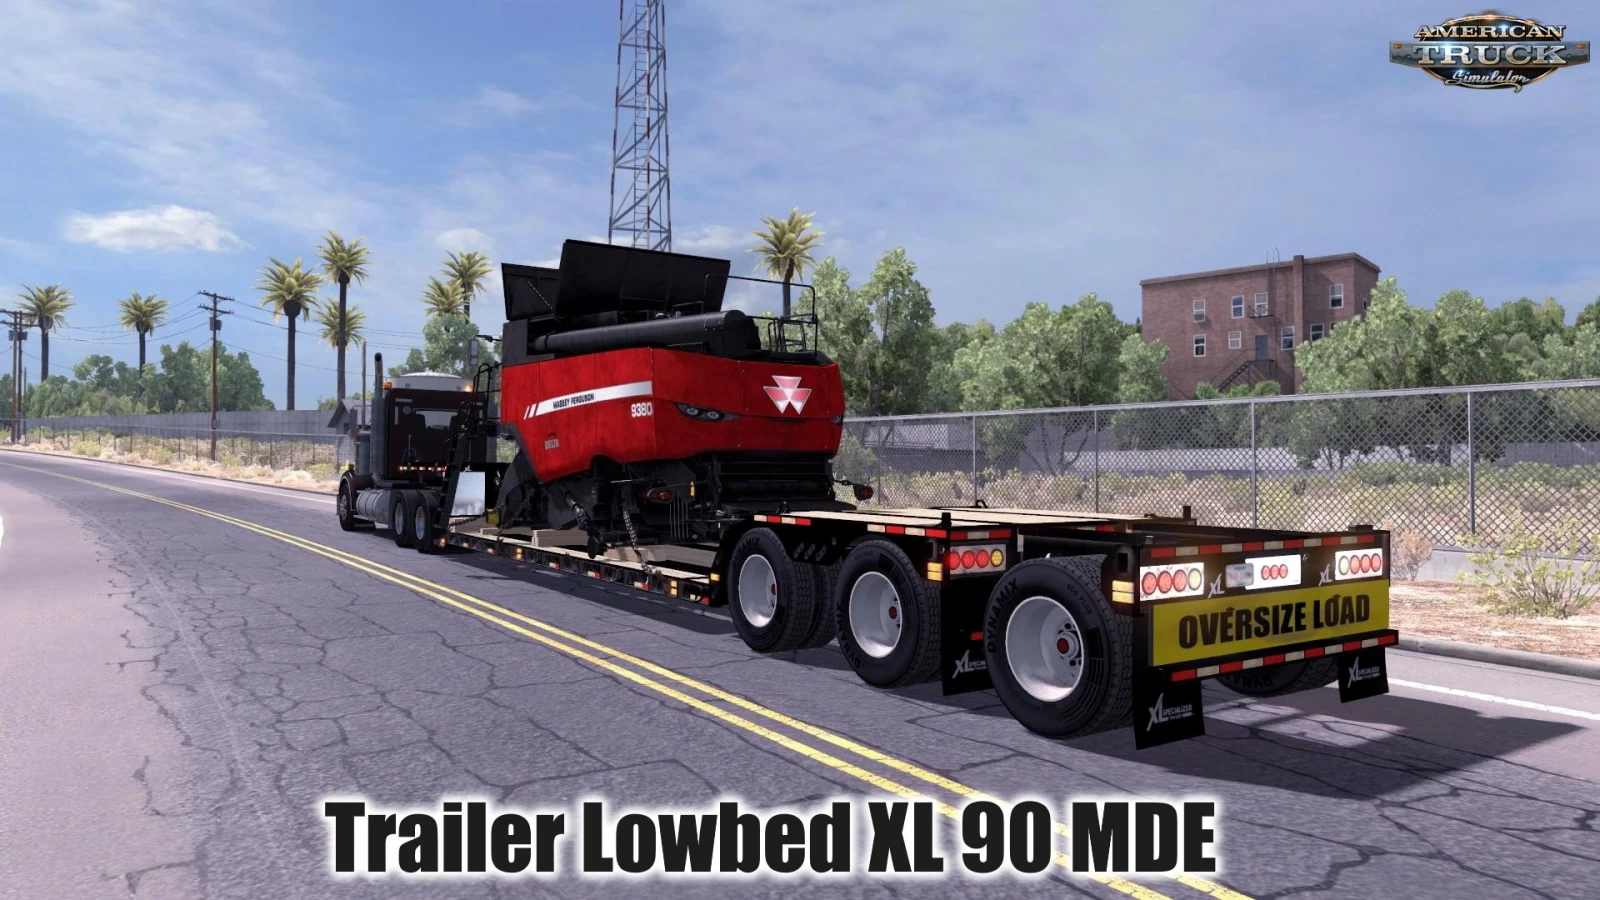 Trailer Lowbed XL 90 MDE v6.2 (1.41.x) for ATS